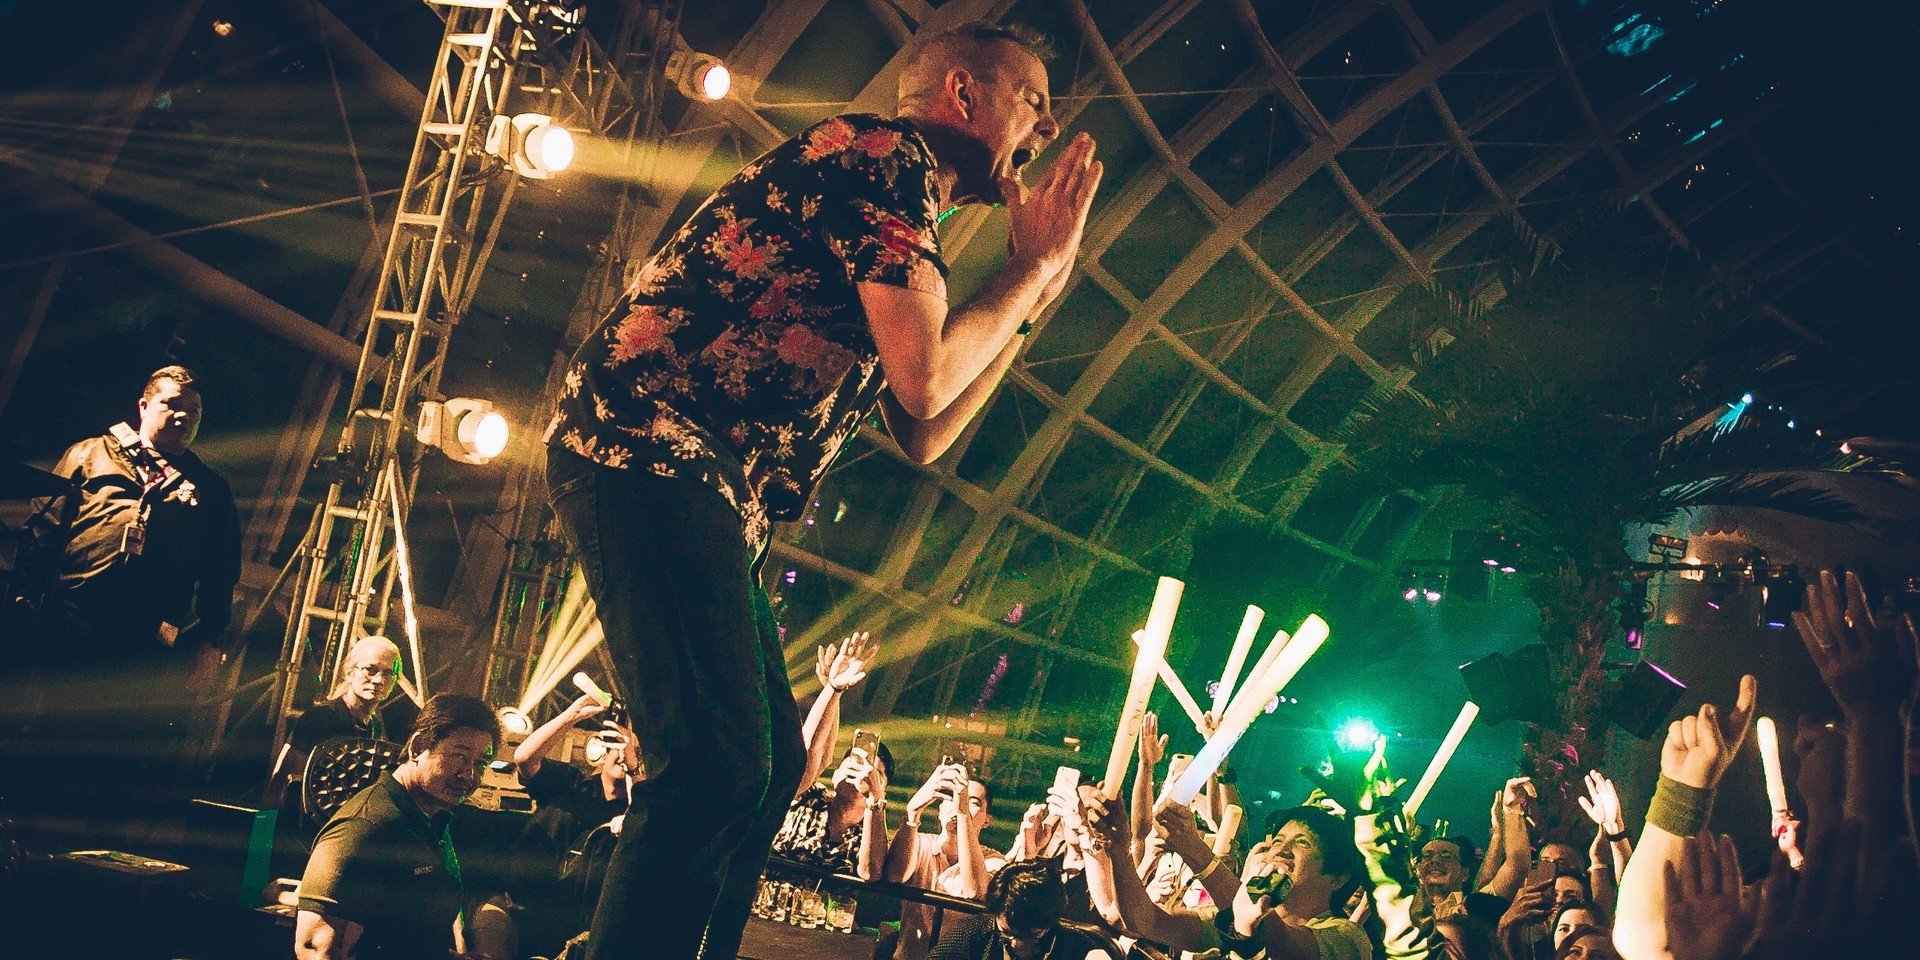 ‘This ain’t no disco’: Fatboy Slim plays smashing Manila rave – photo gallery